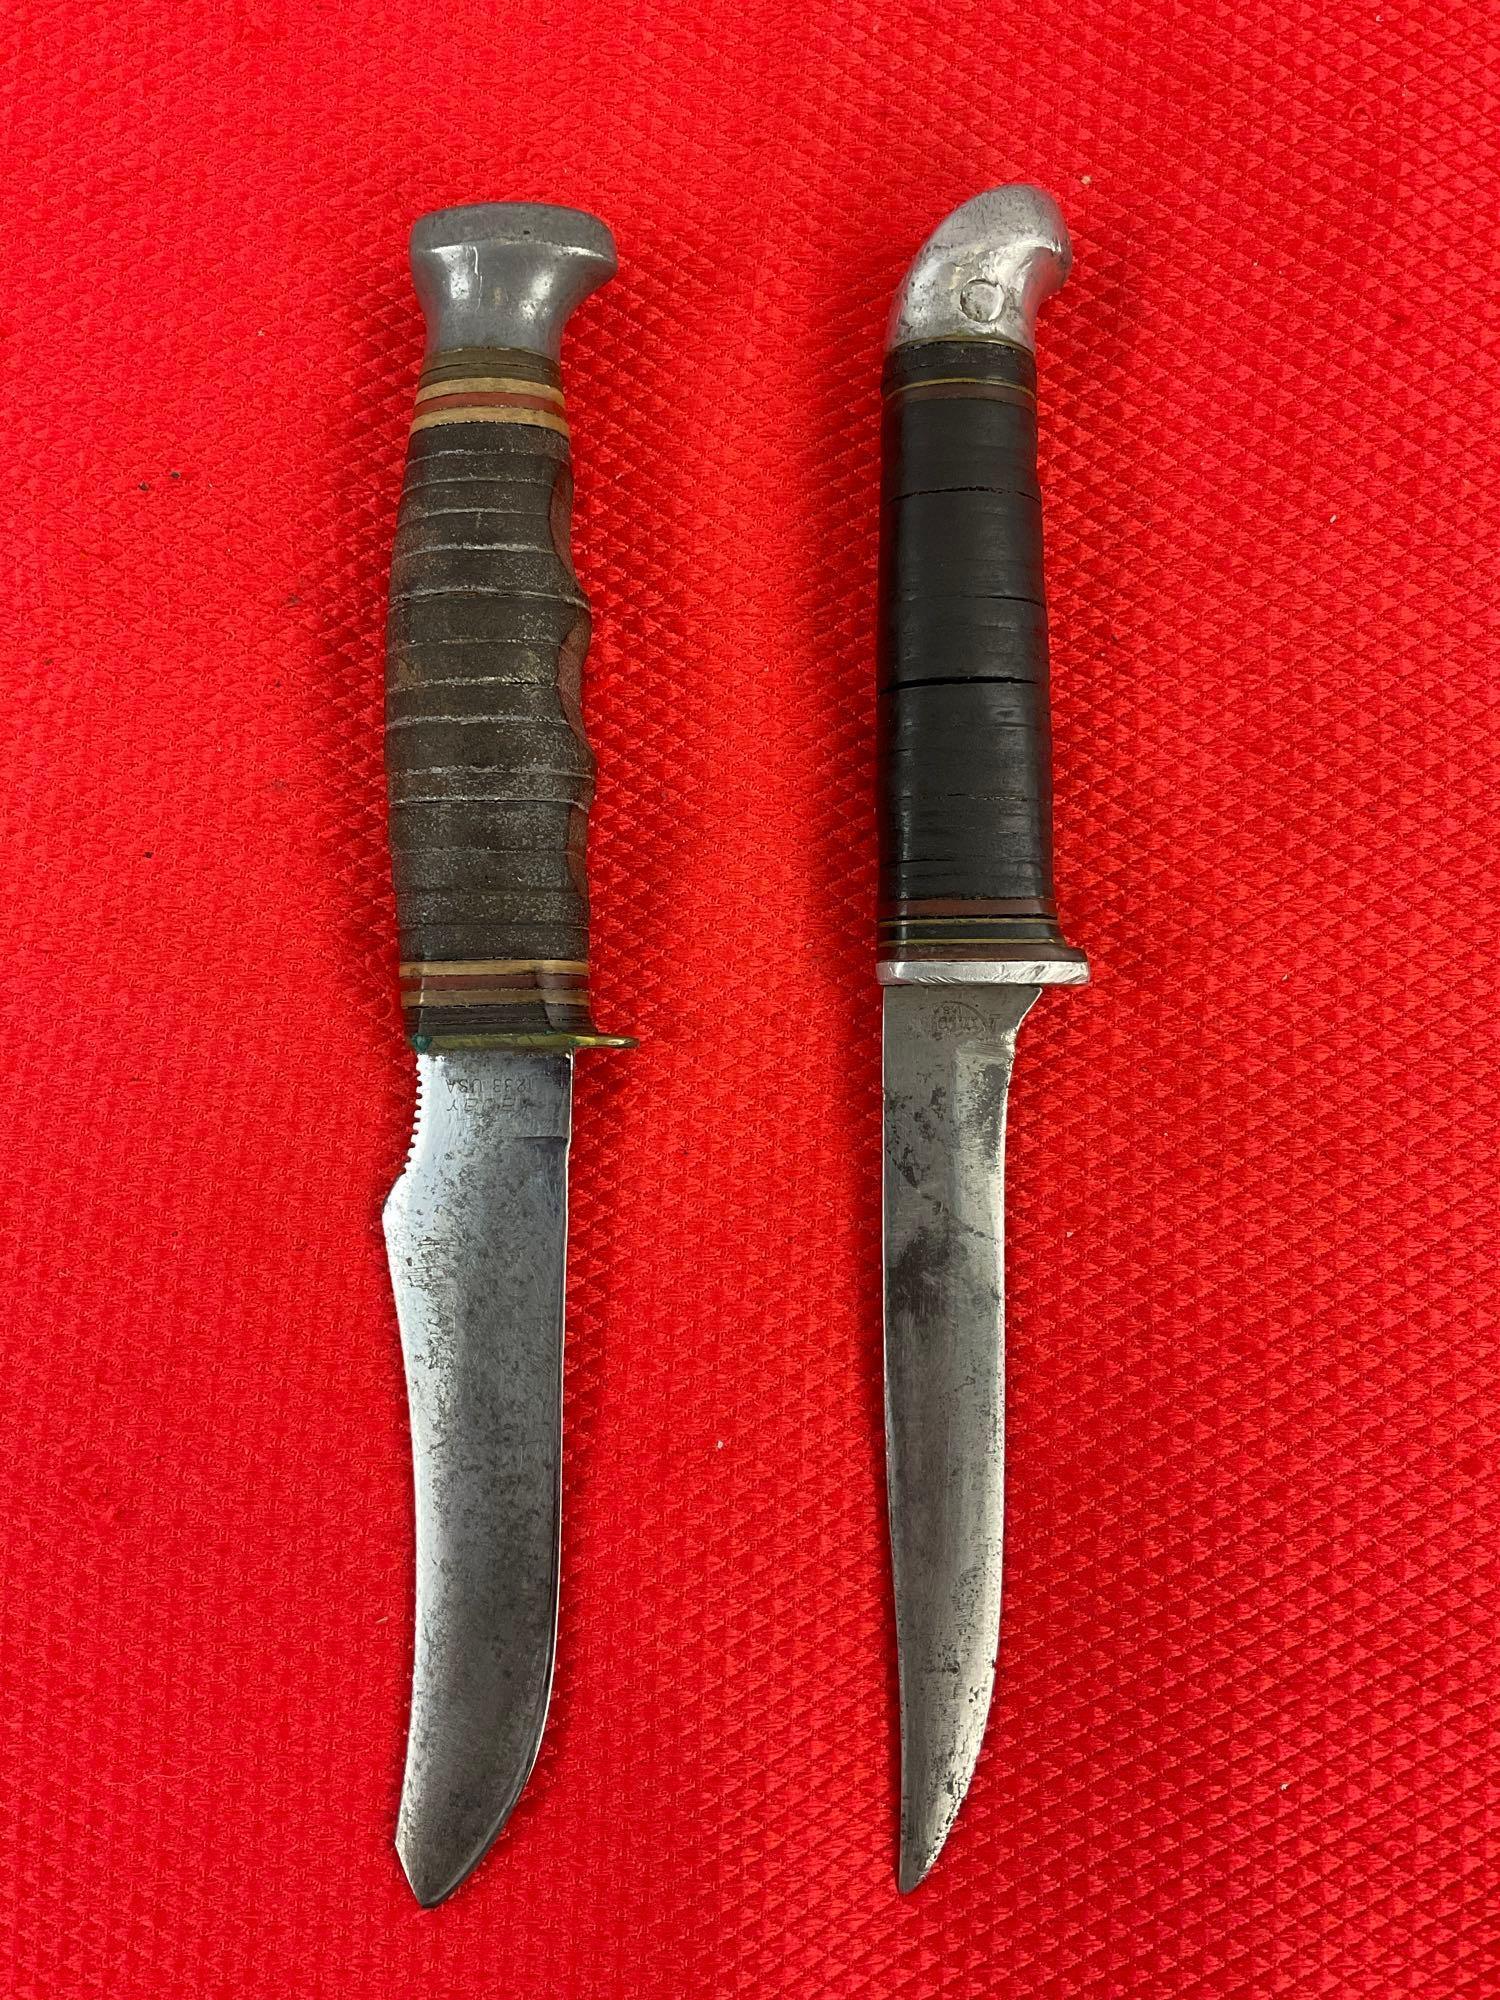 2 pcs Vintage Steel Fixed Blade Knives, 1 Kabar Model No 1233 & 1 Unnumbered Kinfolks. See pics.